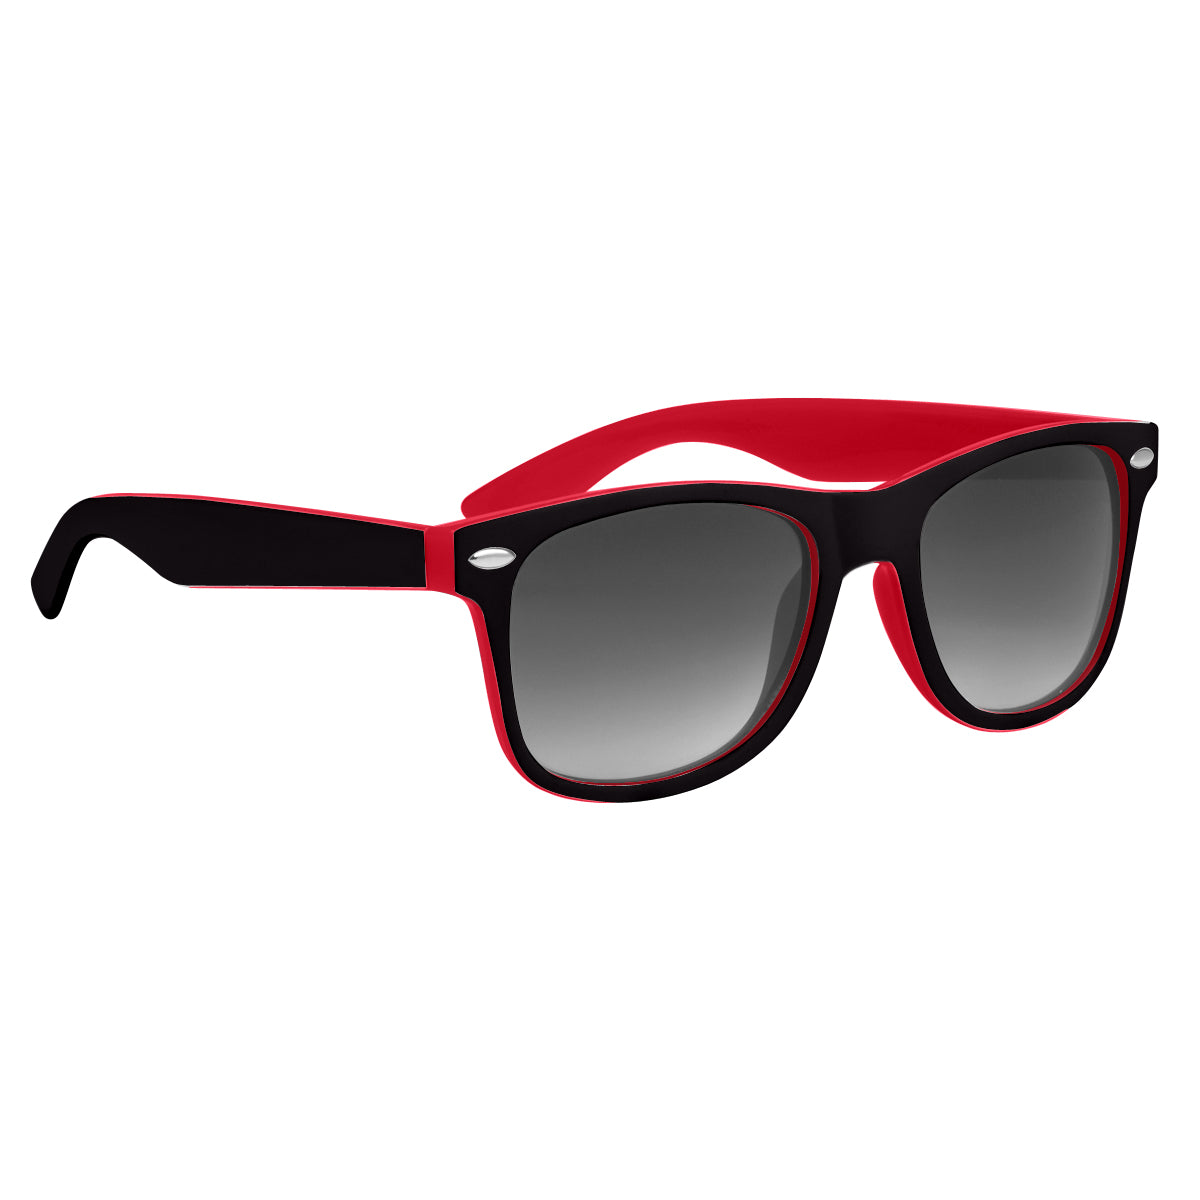 Two-Tone Malibu Sunglasses Sunglasses Hit Promo Red & Black Single Color 